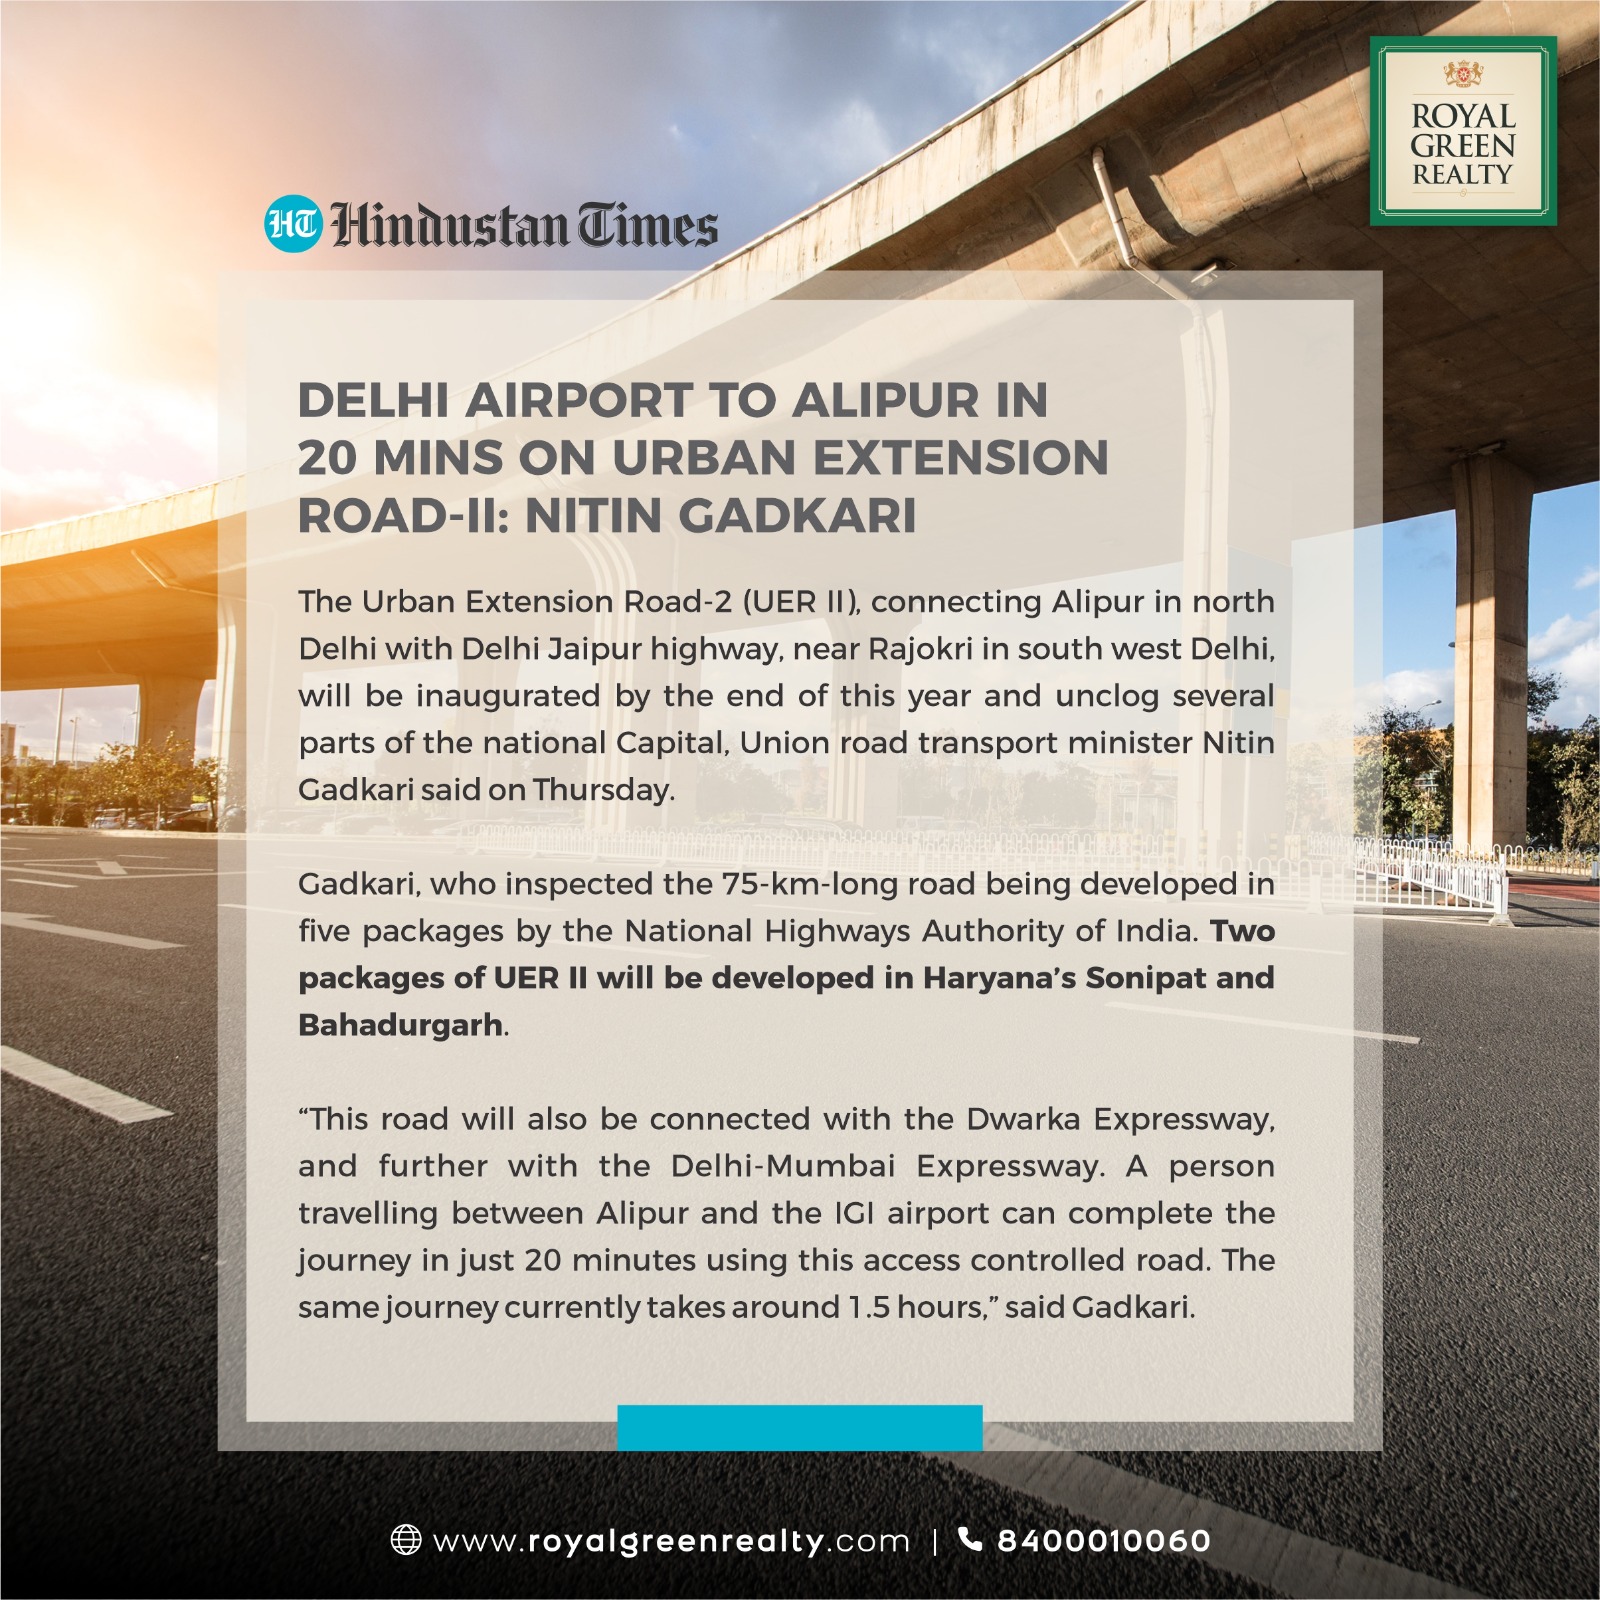 Delhi Airport to Alipur in 20mins on urban extension road-IIL nitin Gadkari